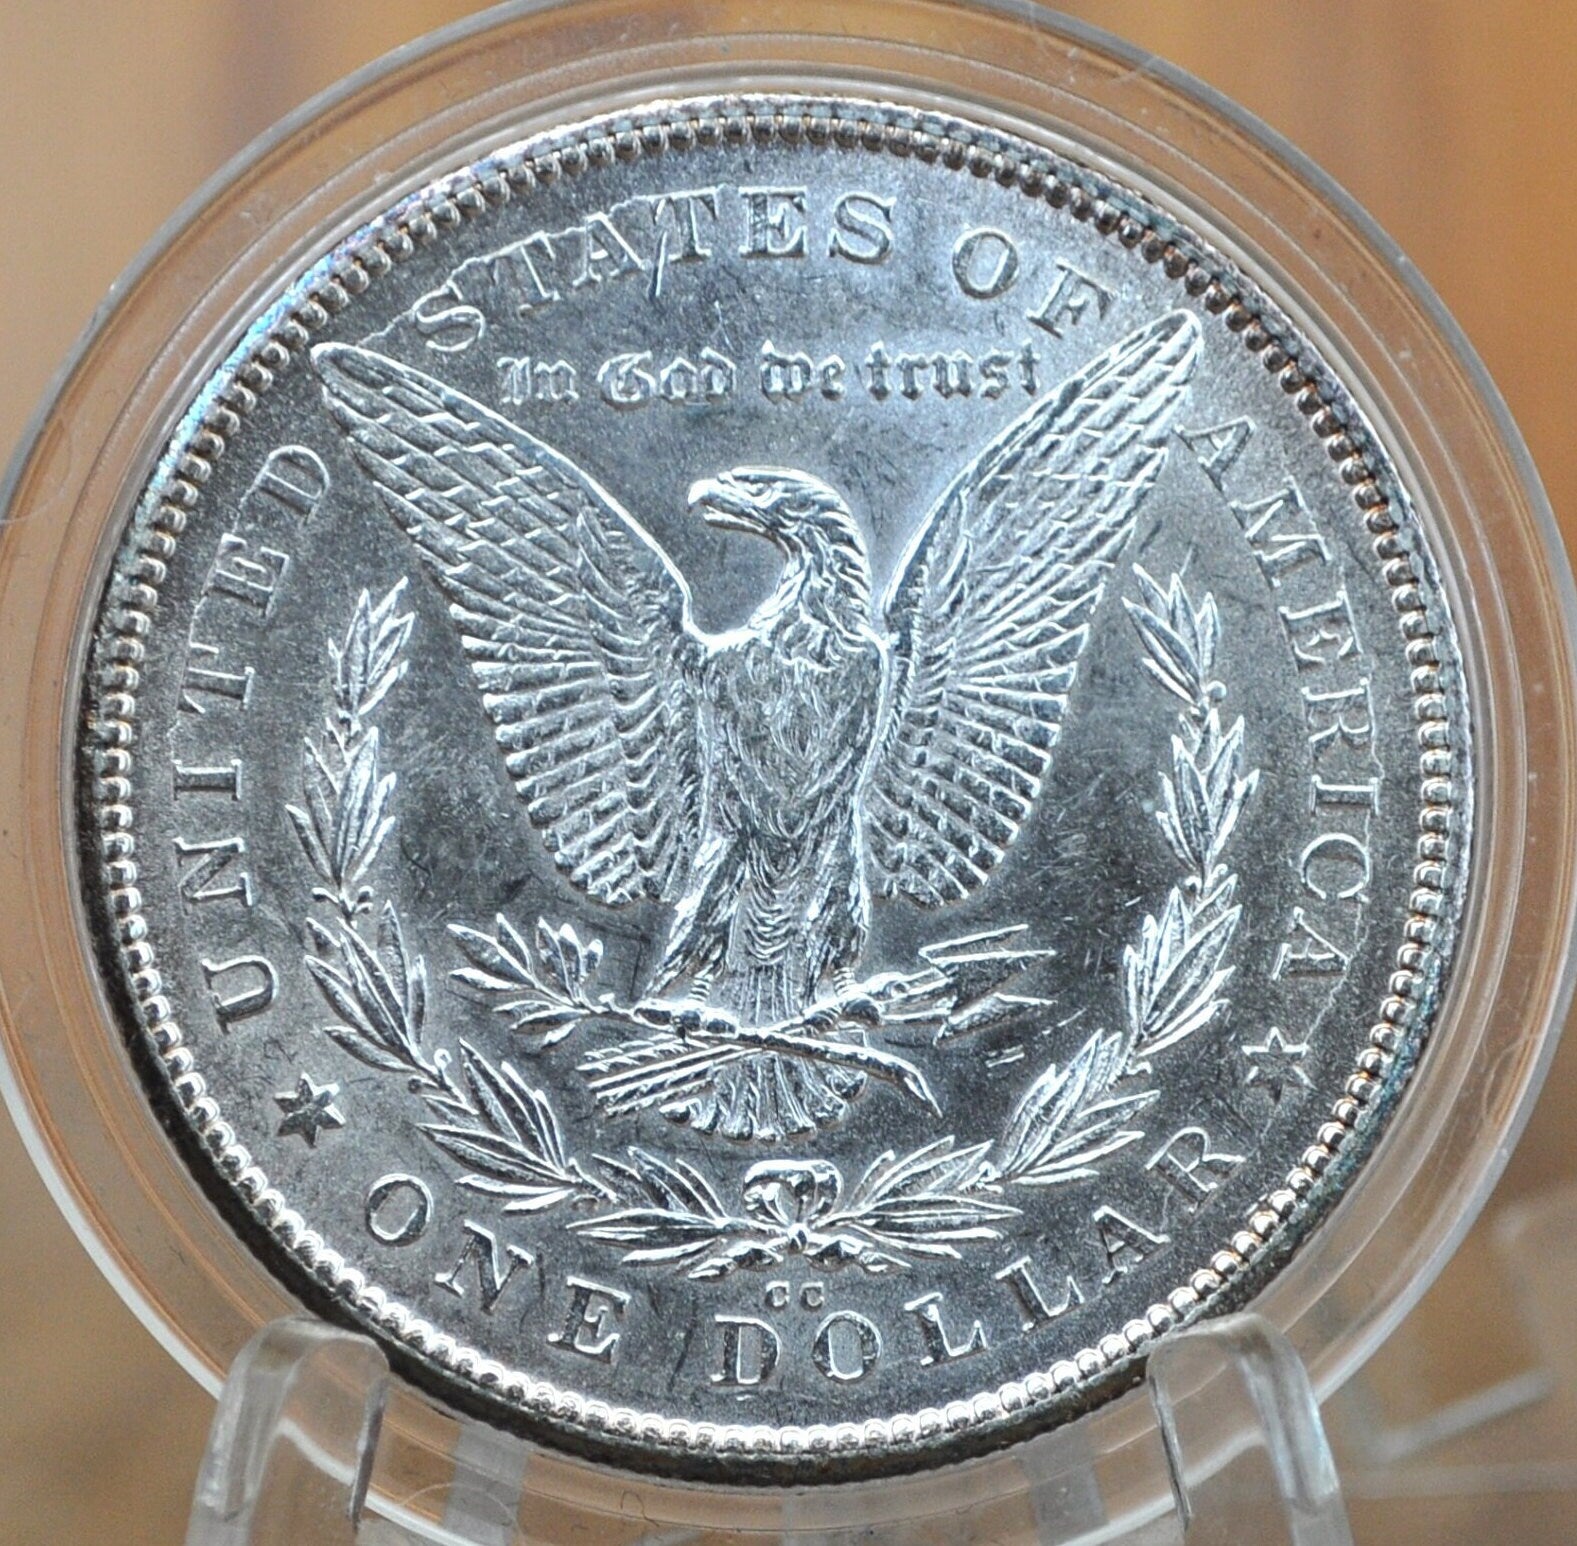 1878 CC Morgan Silver Dollar - MS63 (Choice Uncirculated / MS63) Grade - Carson City Mint, 1878-CC Morgan Dollar 1878CC, Key Date, Authentic